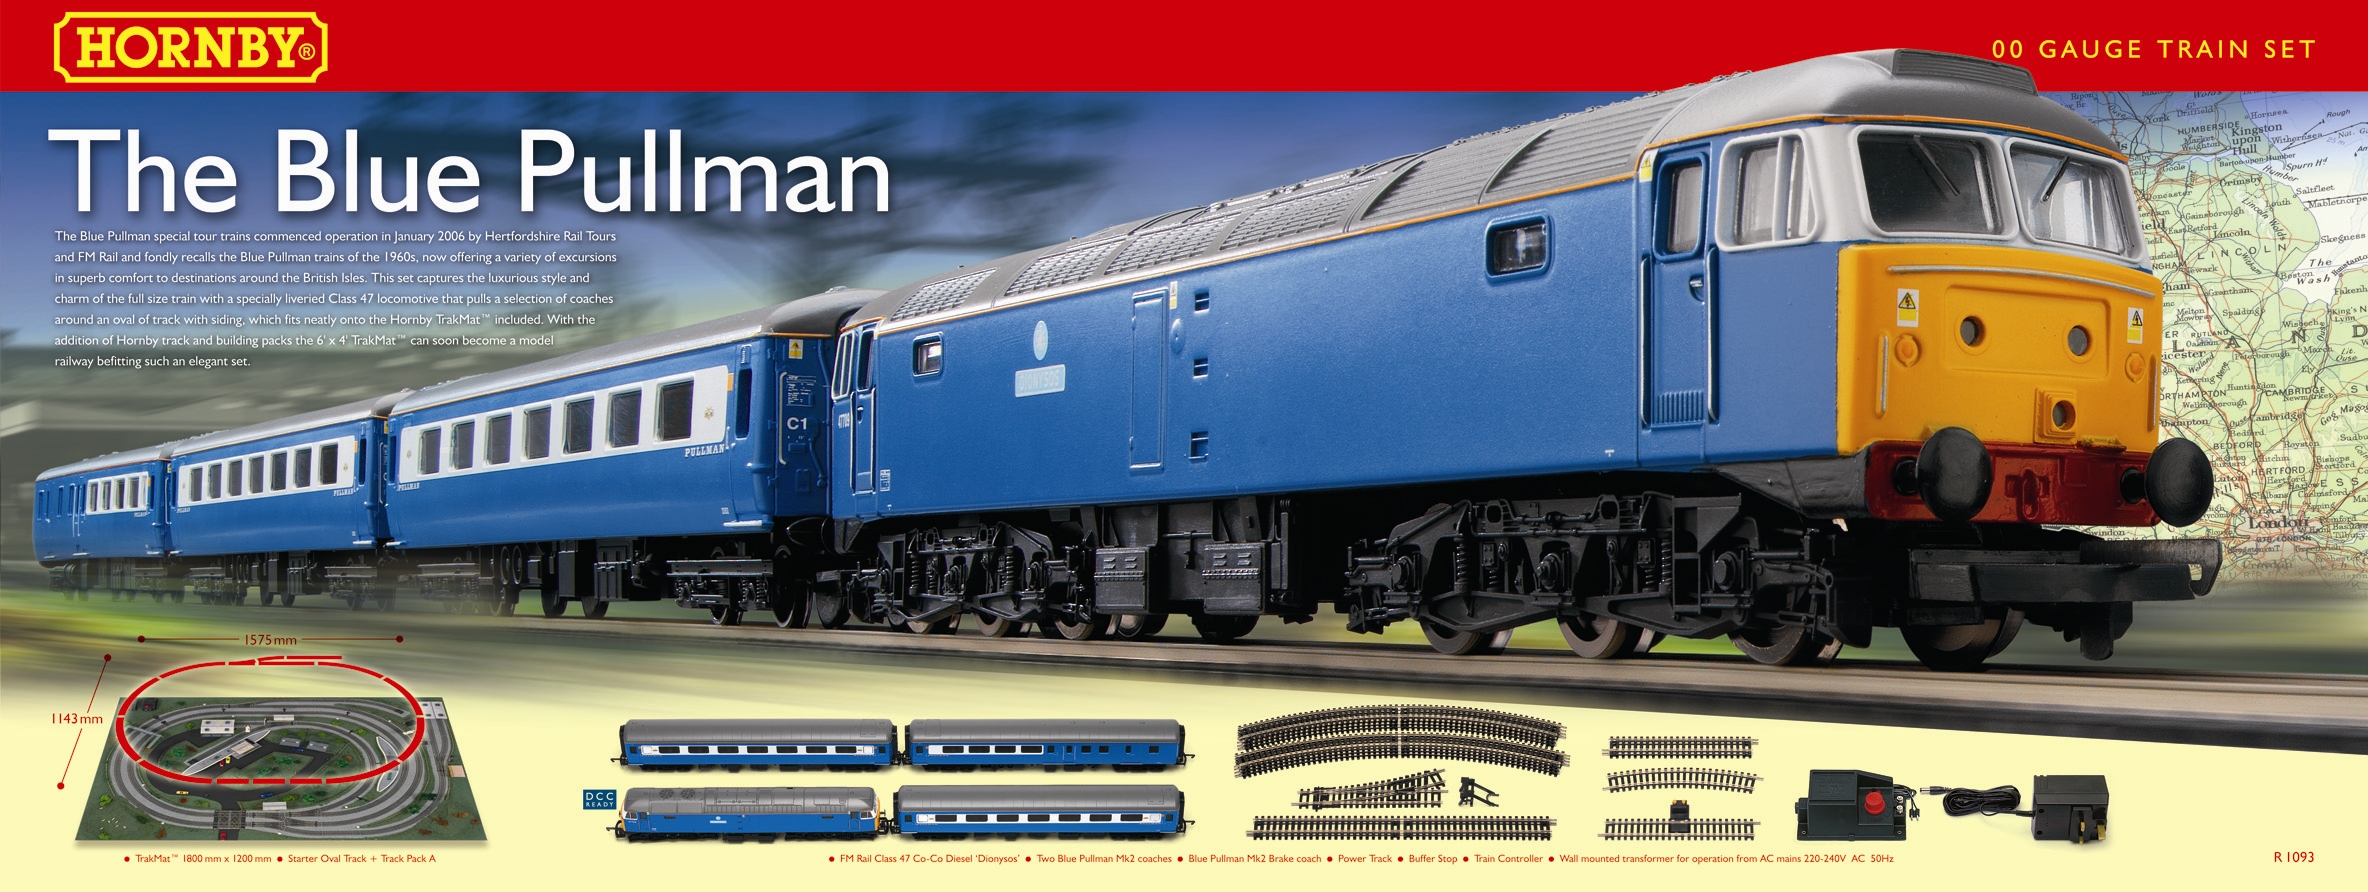 r1093-the-blue-pullman-lrg.jpg